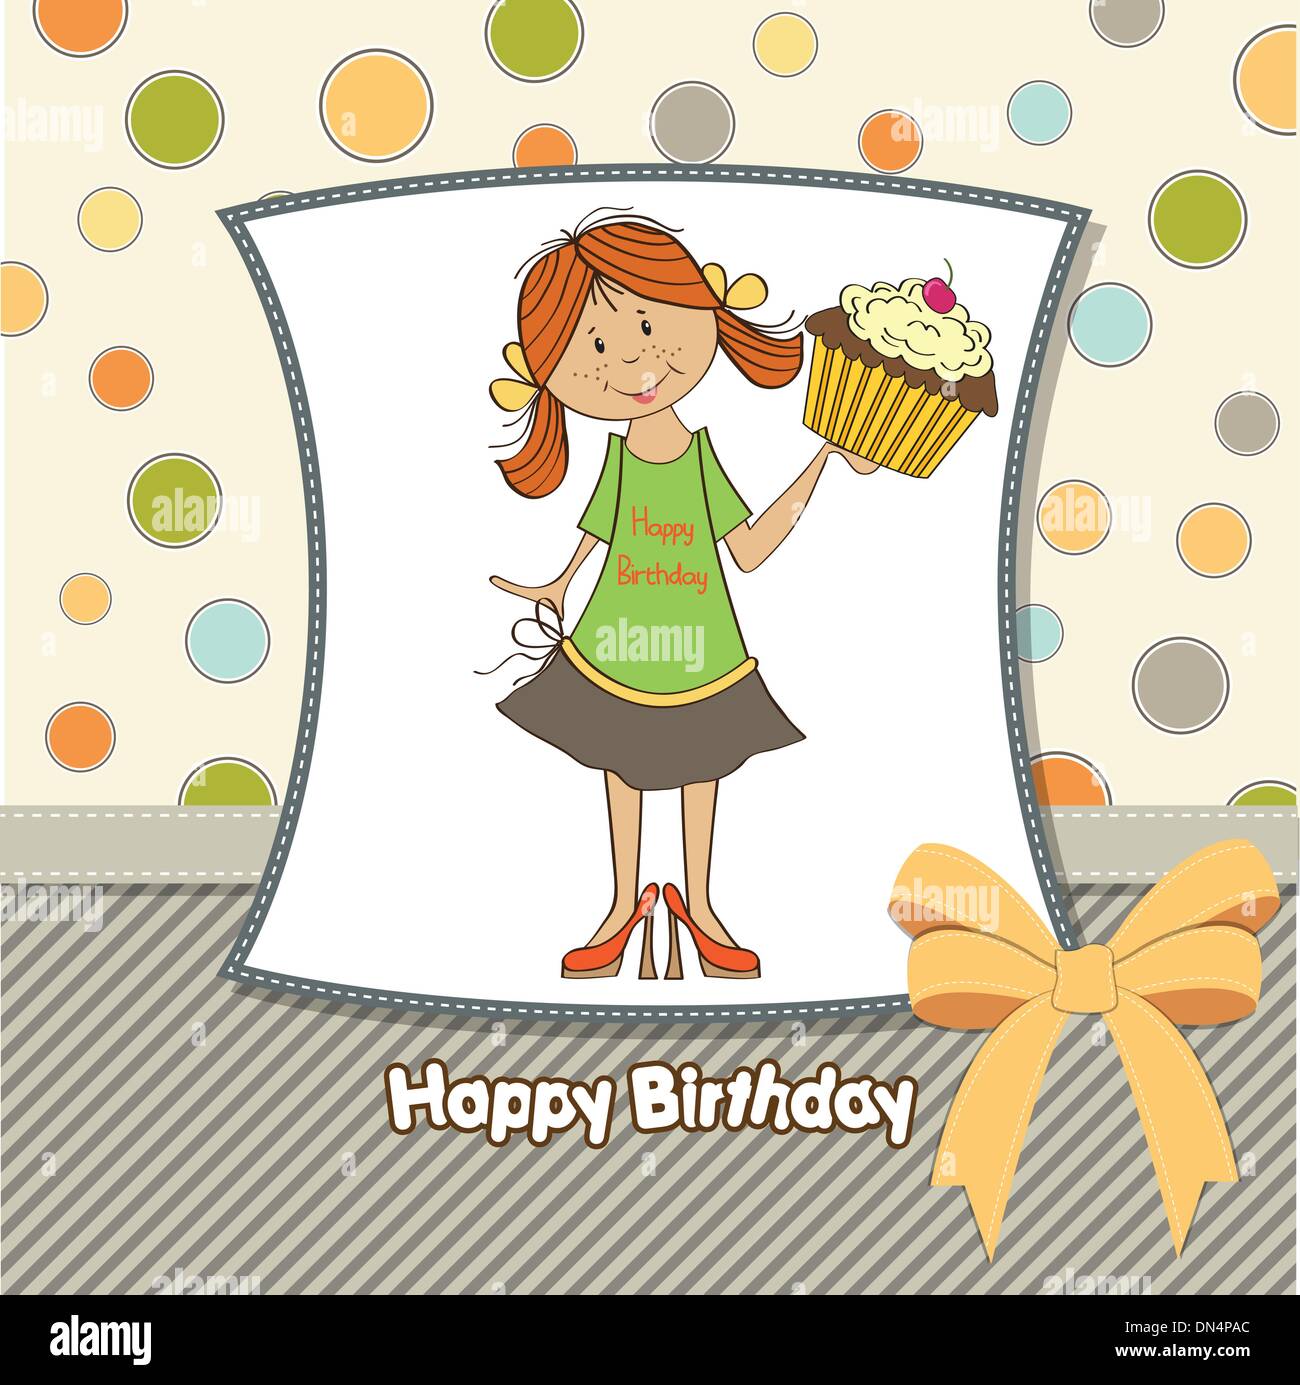 birthday greeting card with girl and big cupcake Stock Vector